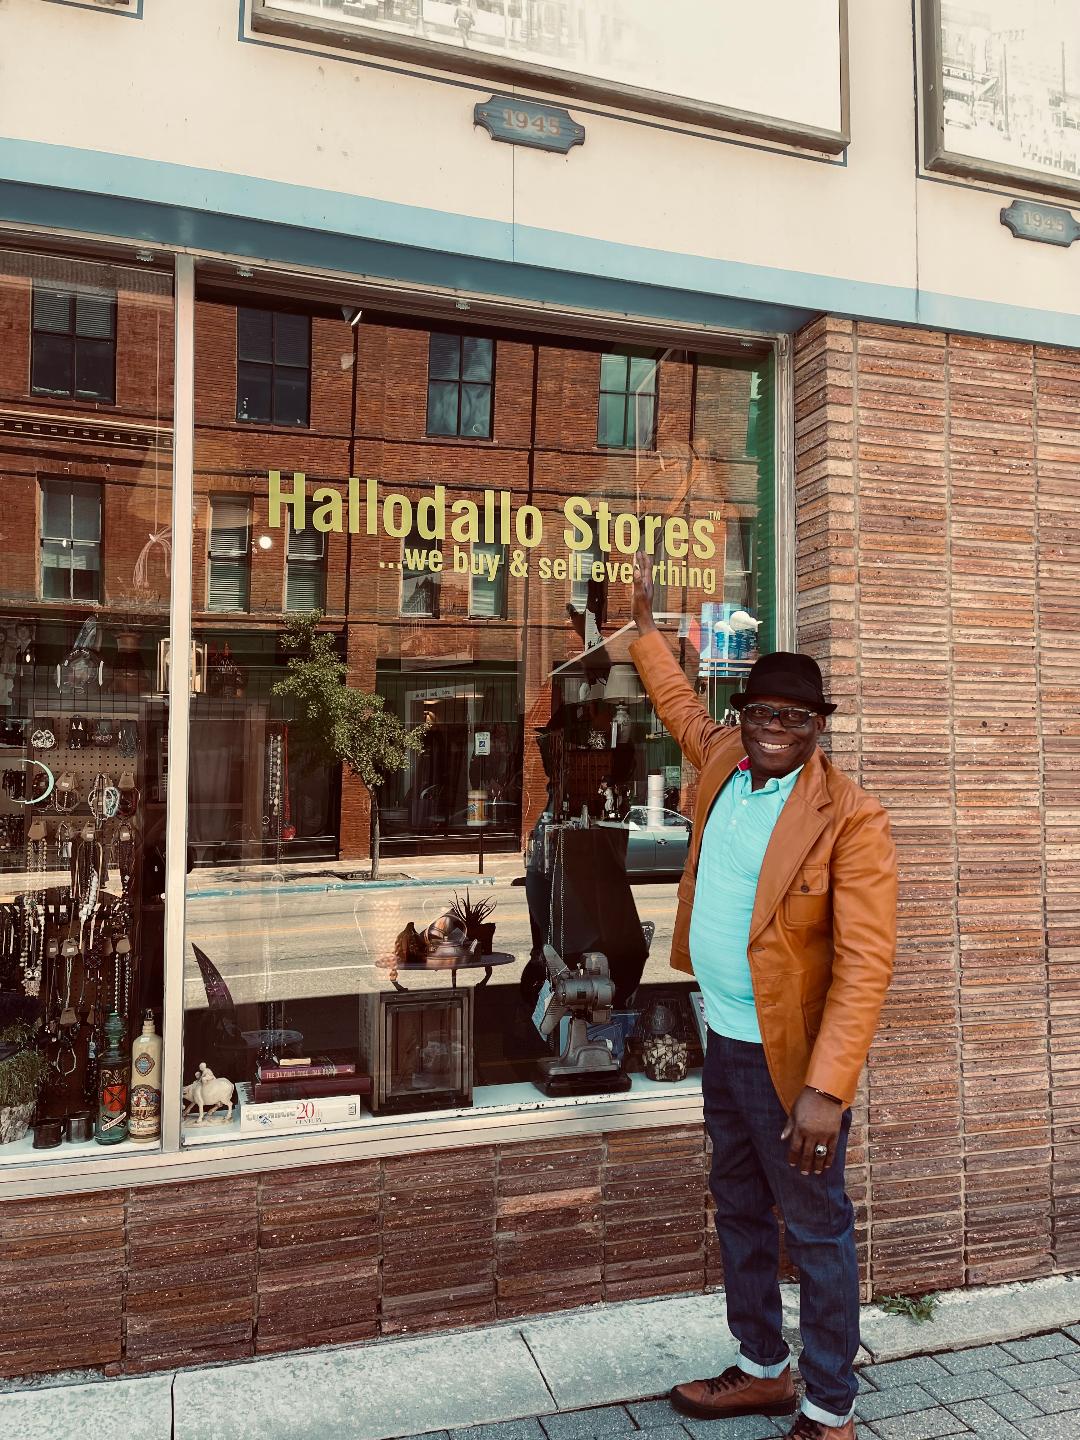 Hallodallo Stores LLC